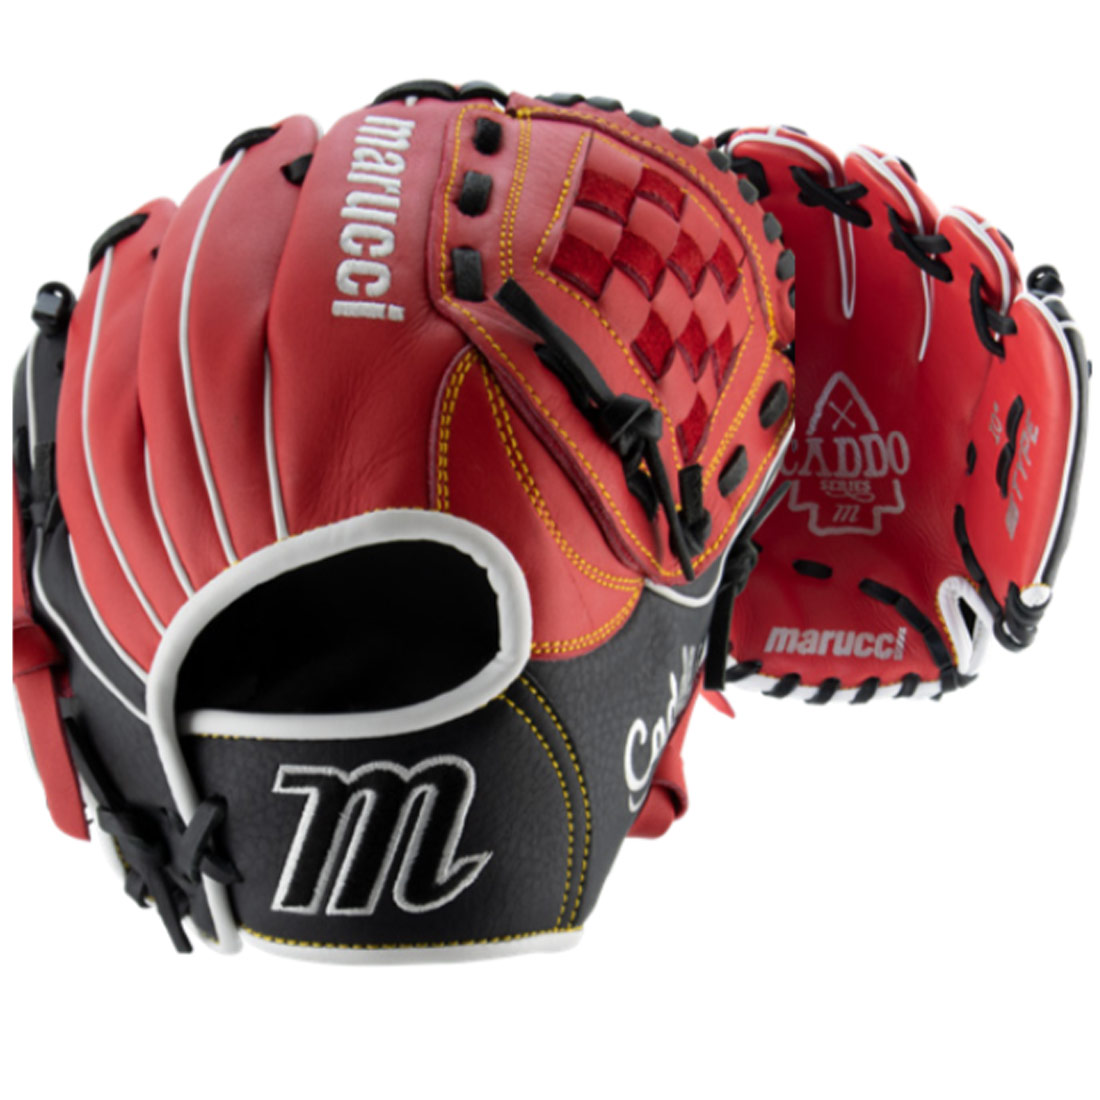 Marucci Caddo Series Youth Baseball Glove 10\" MFG2CD1000-R/BK